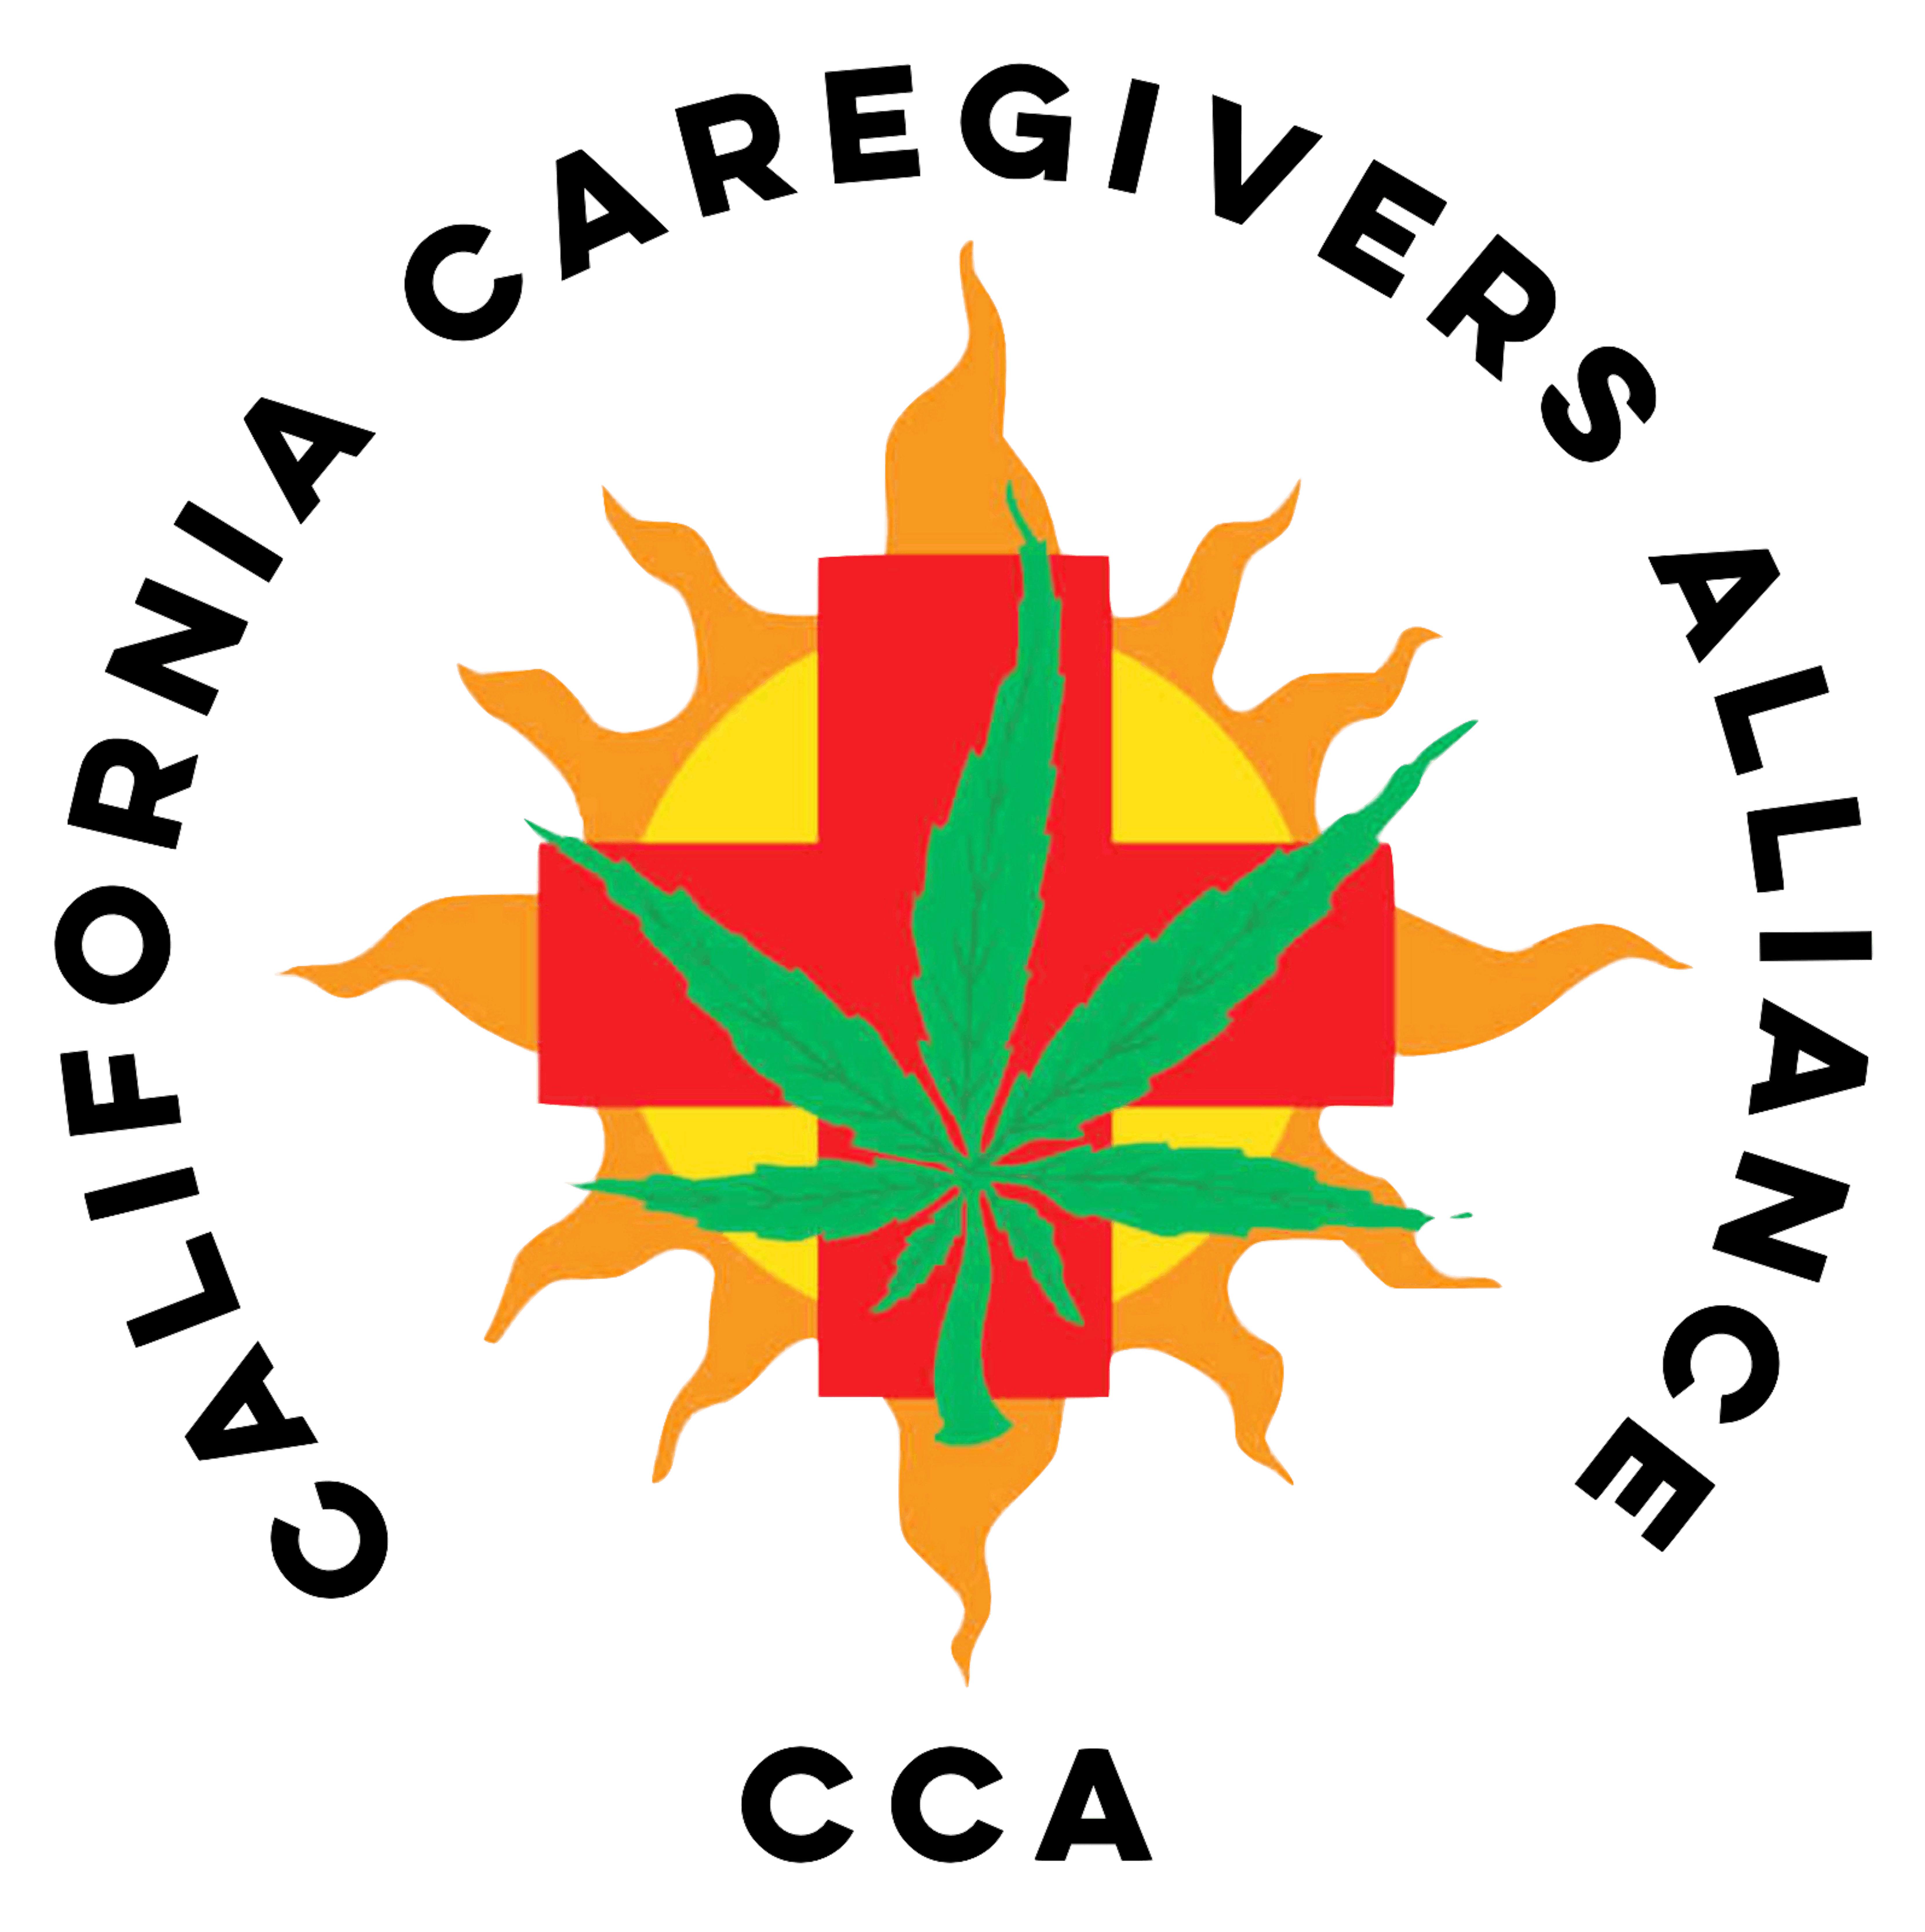 CCA California Caregivers Alliance - Medical Marijuana Doctors - Cannabizme.com